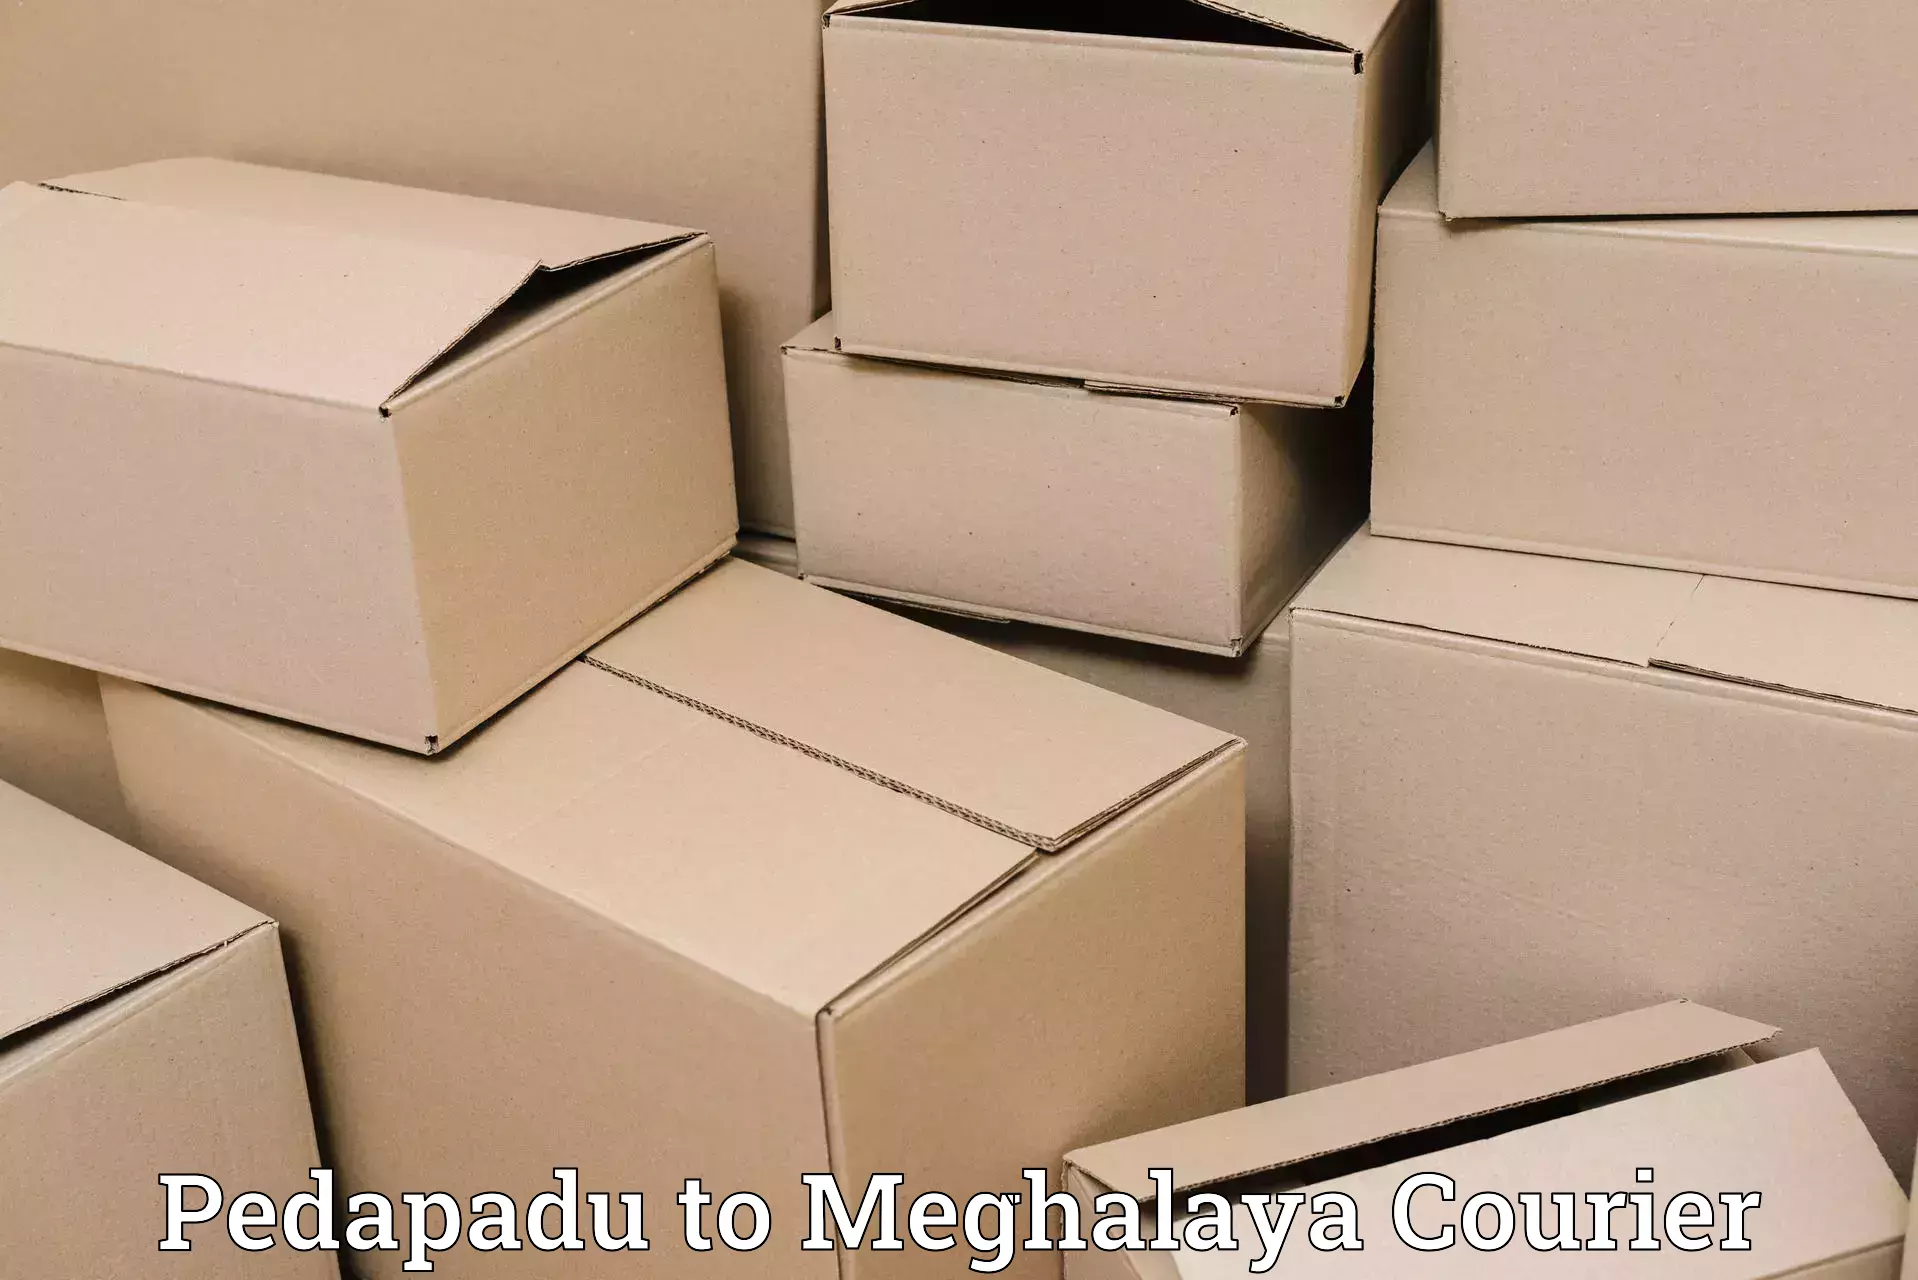 E-commerce shipping partnerships Pedapadu to Meghalaya